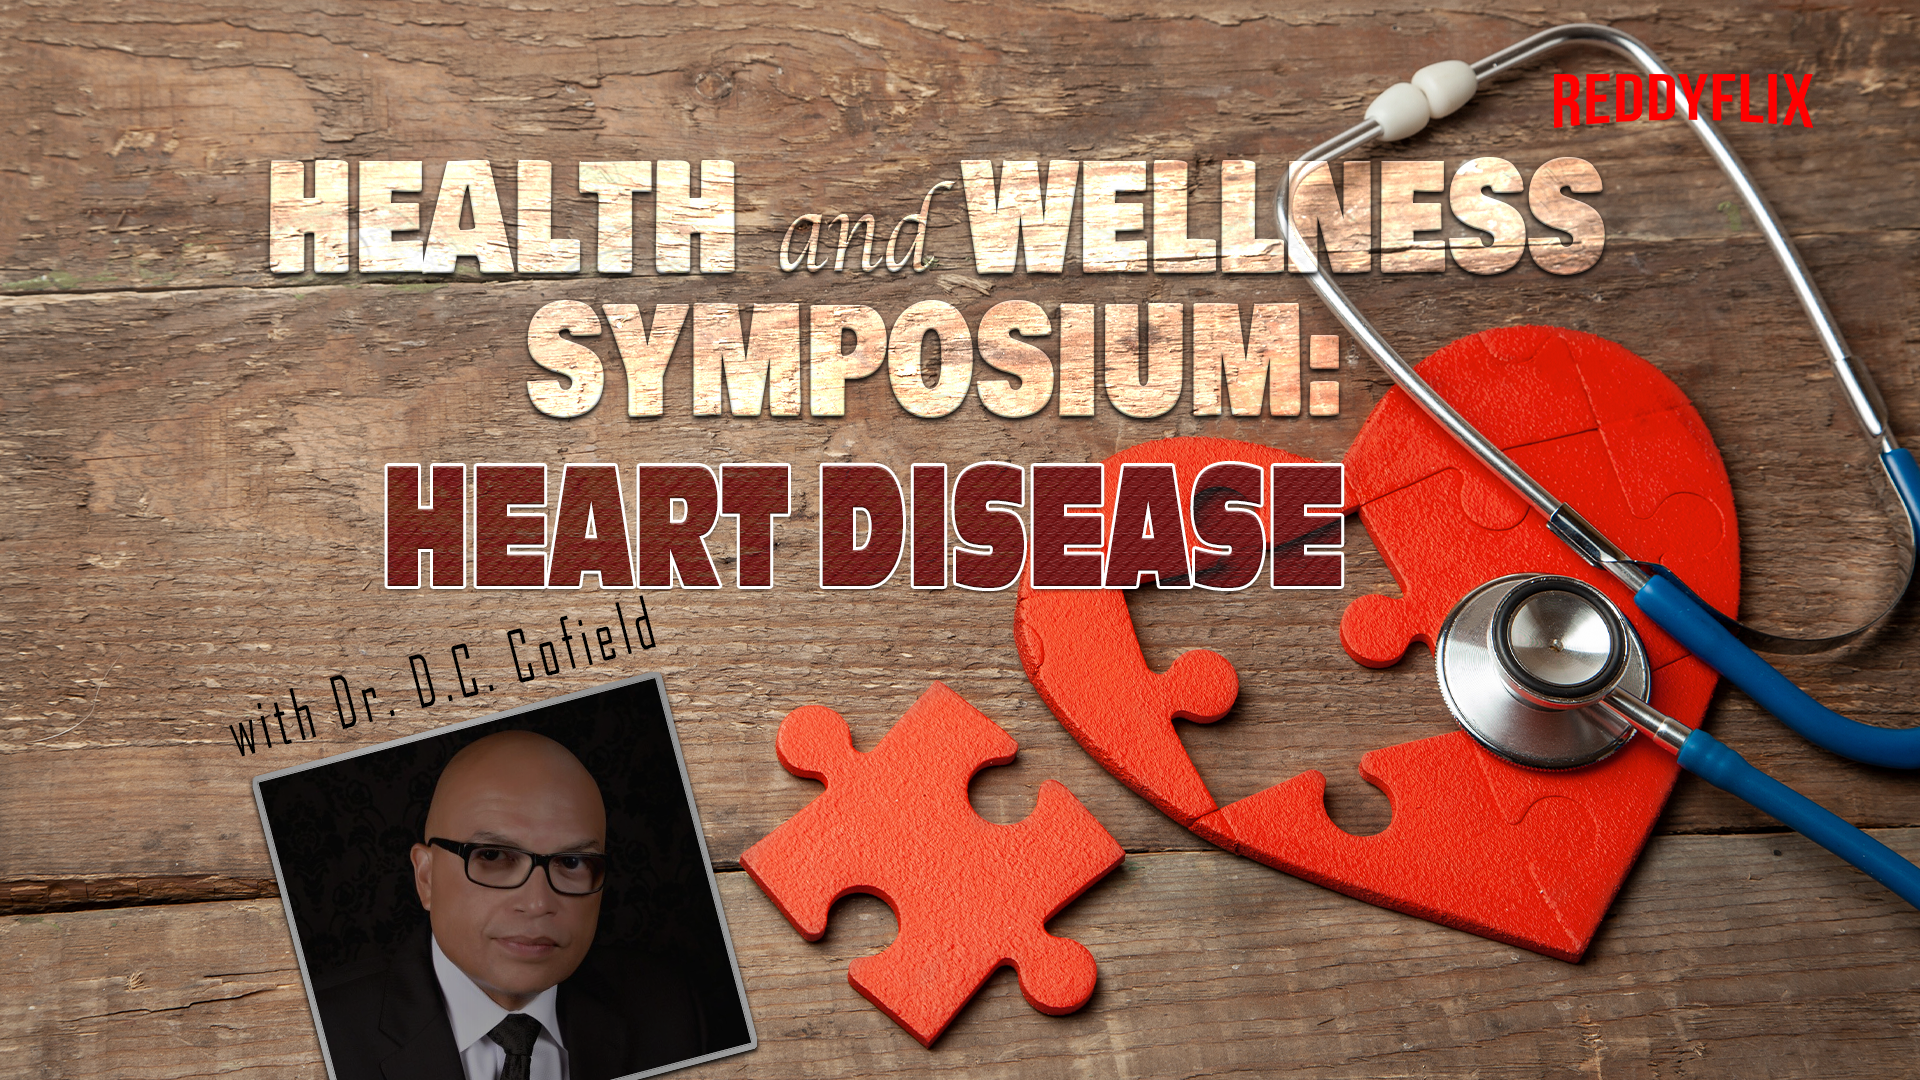 HEALTH AND WELLNESS SYMPOSIUM: Heart Disease